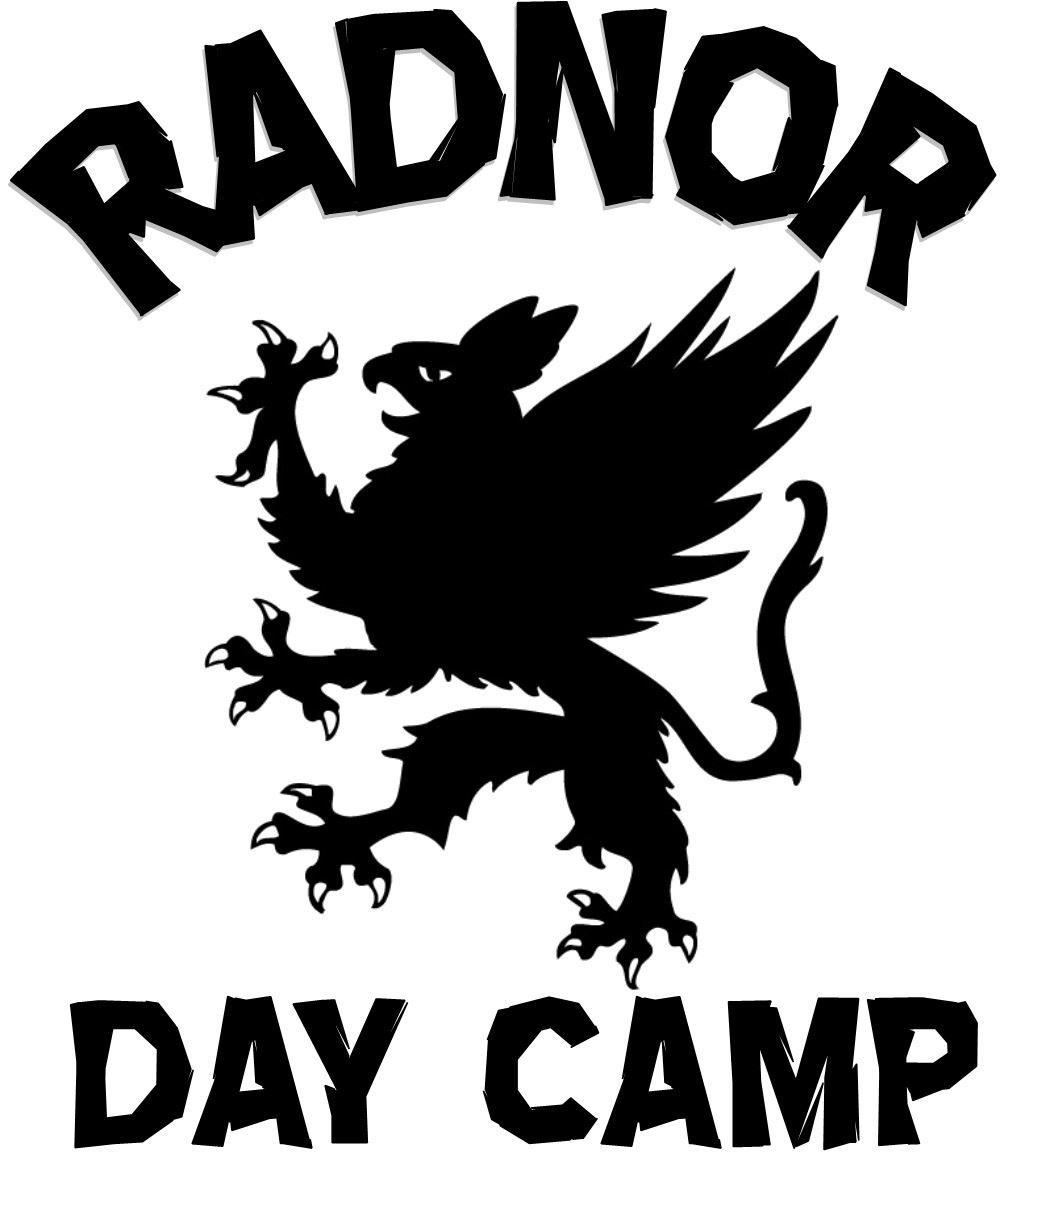 Radnor Logo - Programs & Initiatives. Radnor, PA